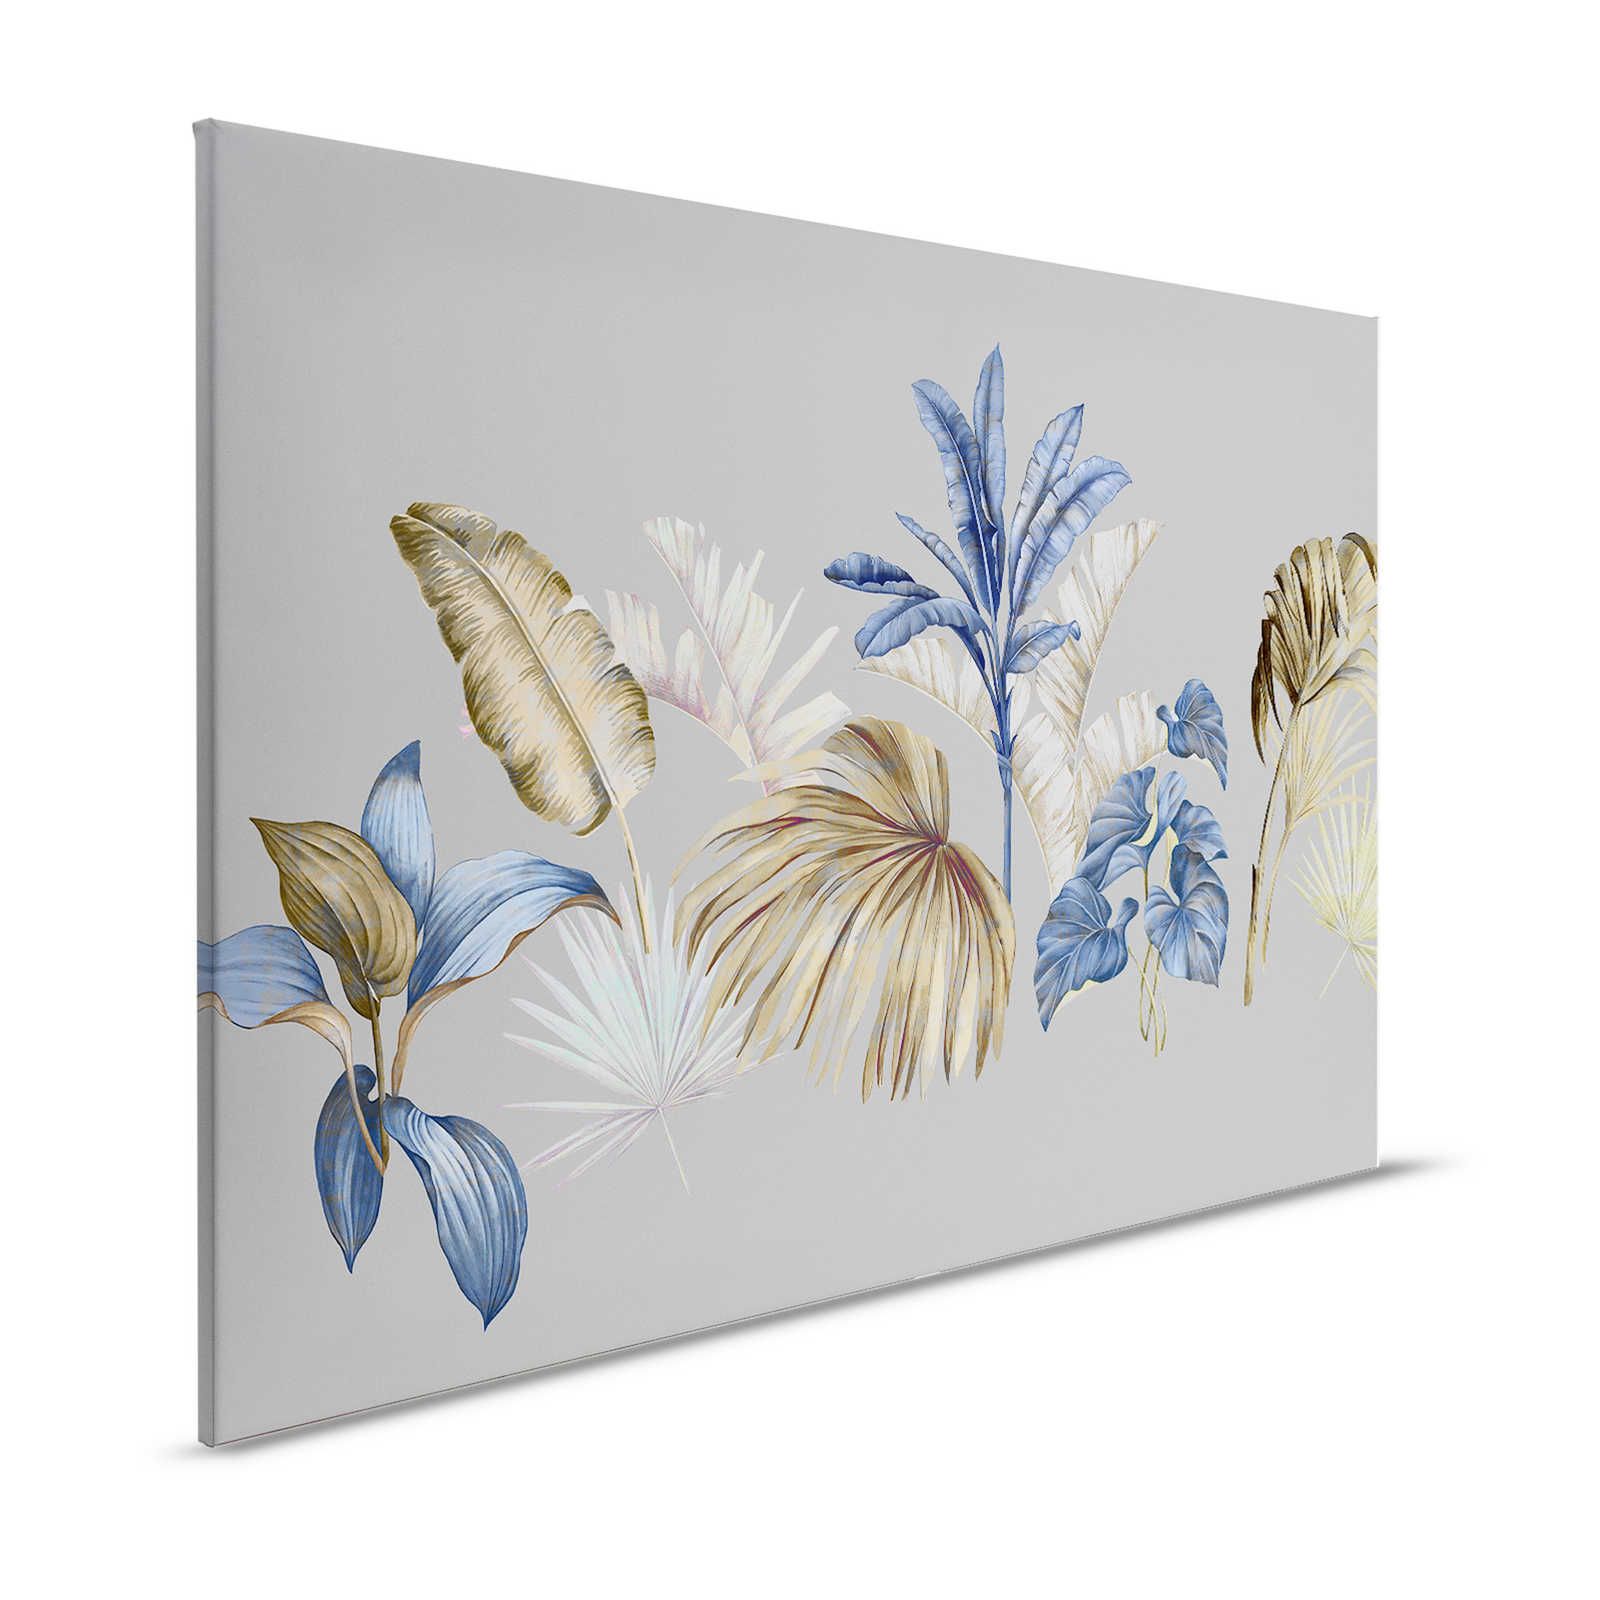 Brasilia 2 - Grey Canvas painting Leaf Design in Sage Green & Royal Blue - 1.20 m x 0.80 m
